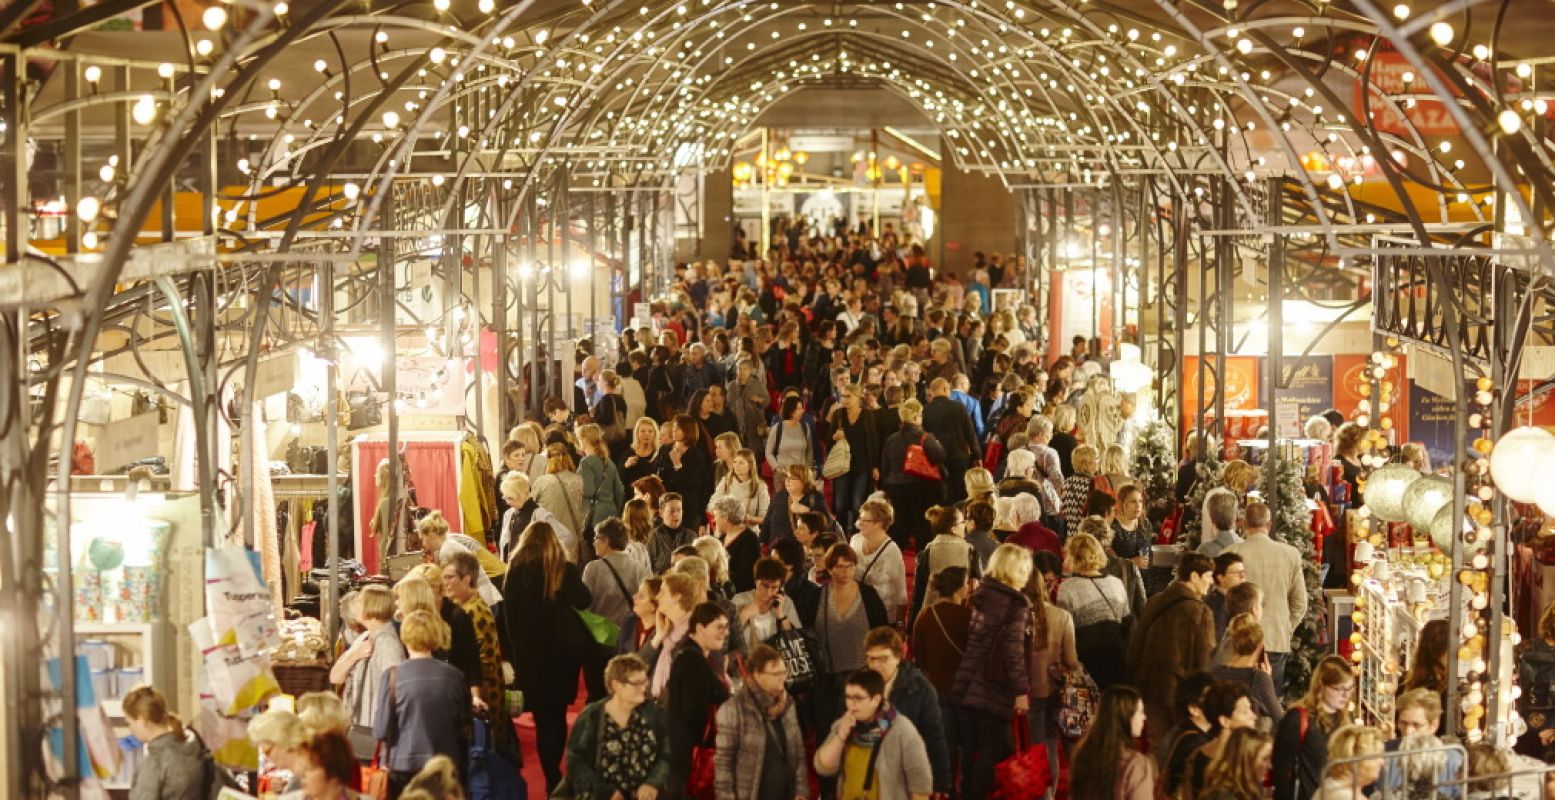 Non-stop shoppen en samen in de feeststemming komen op de Margriet Winterfair. Foto: Sanoma SBS Events.